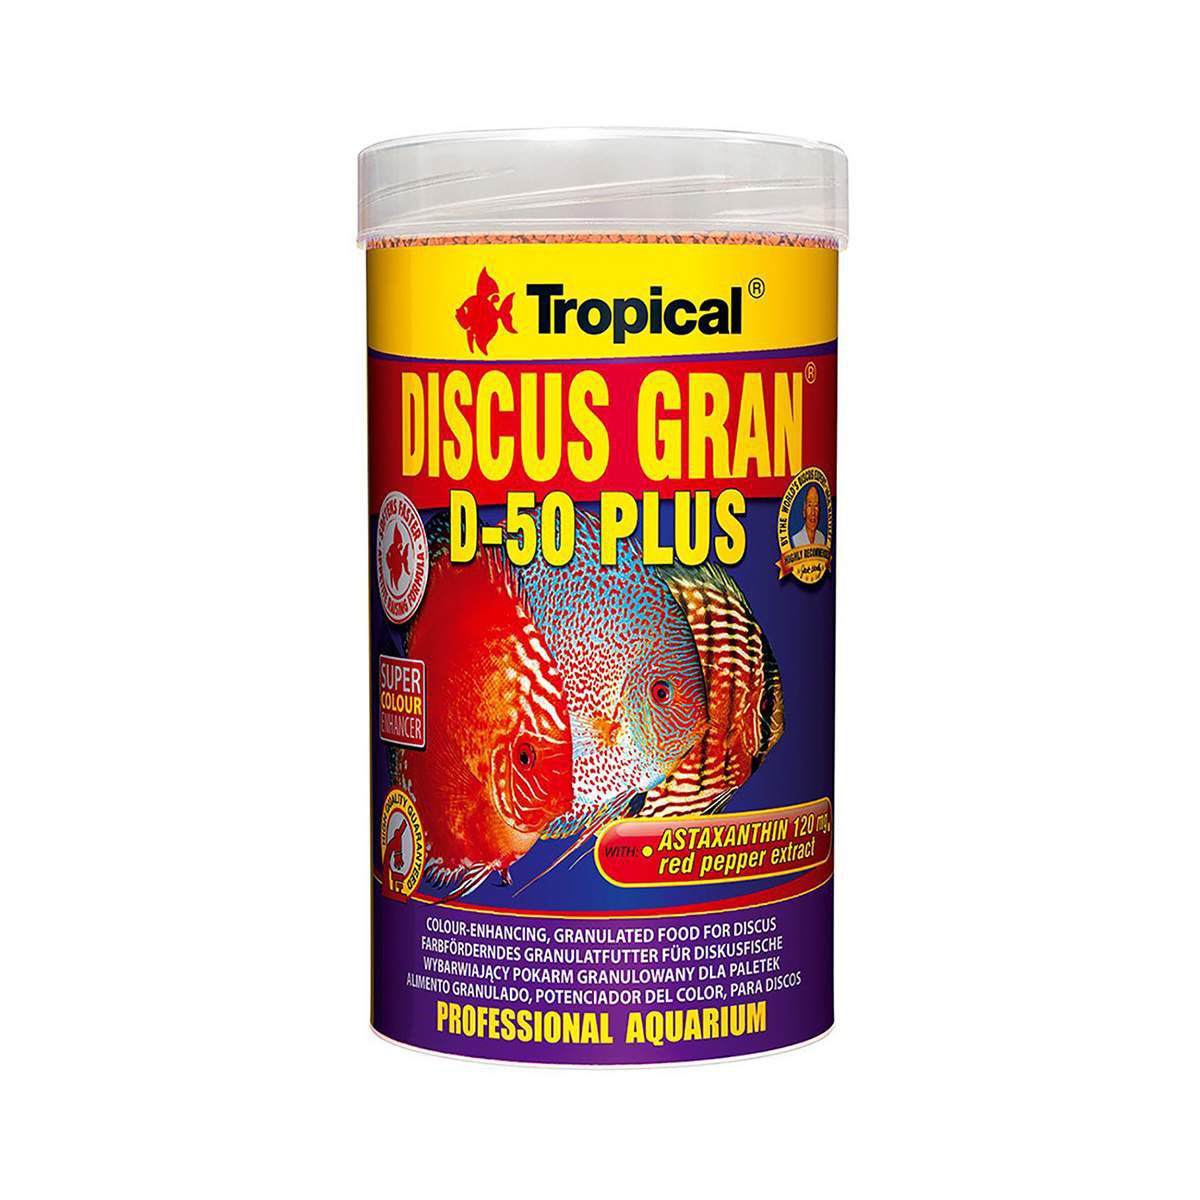 Tropical Discus Gran D-50 Plus 44g